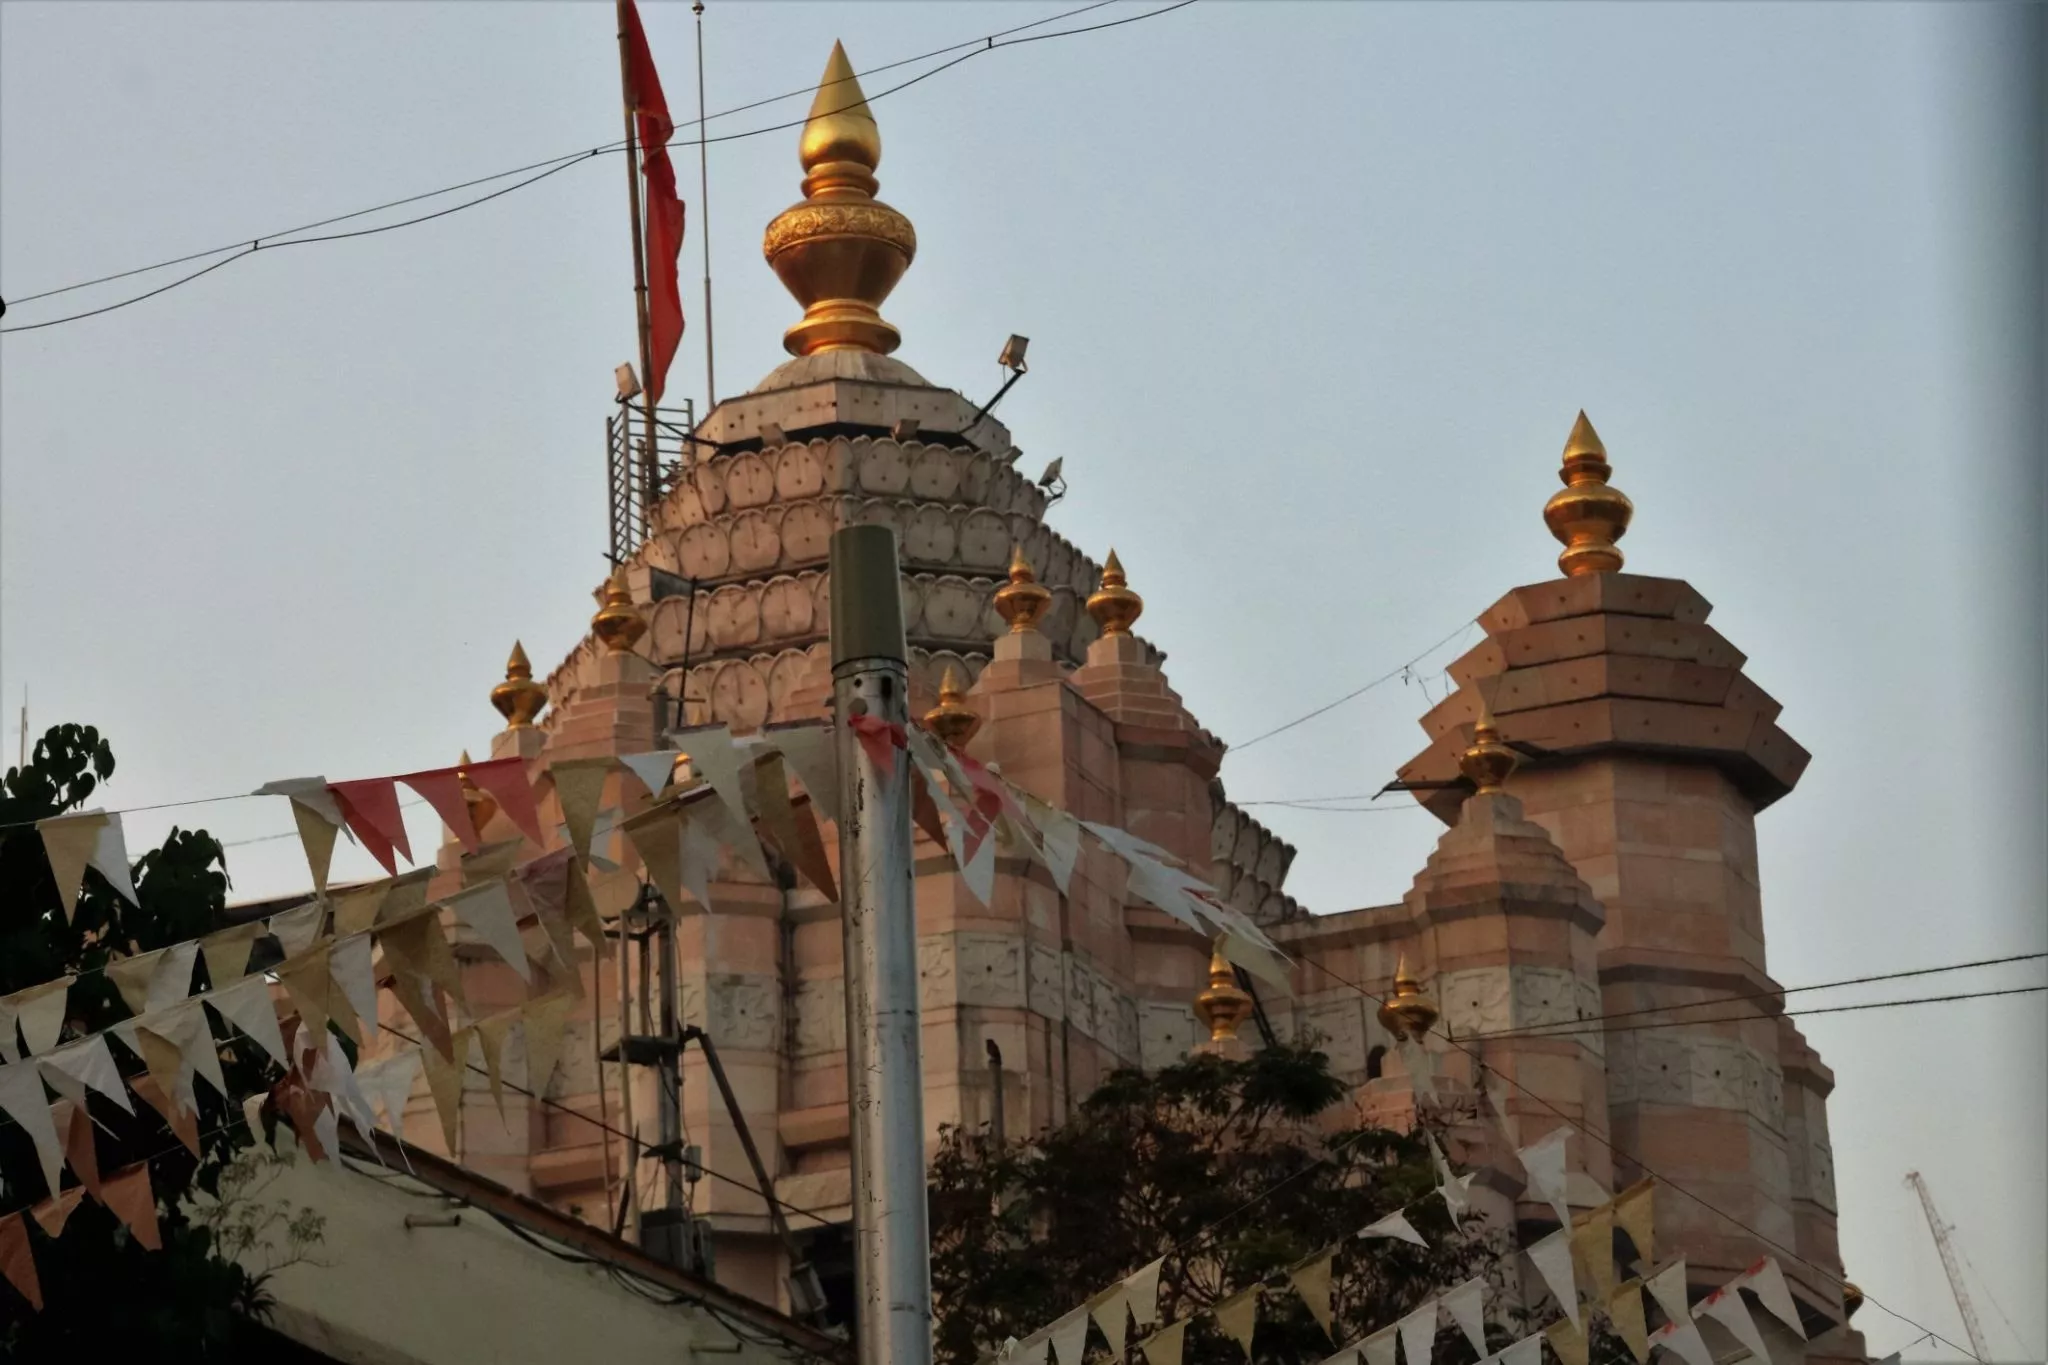 Shri Siddhi Vinayak Ganapati Mandir in India, Central Asia | Architecture - Rated 5.1